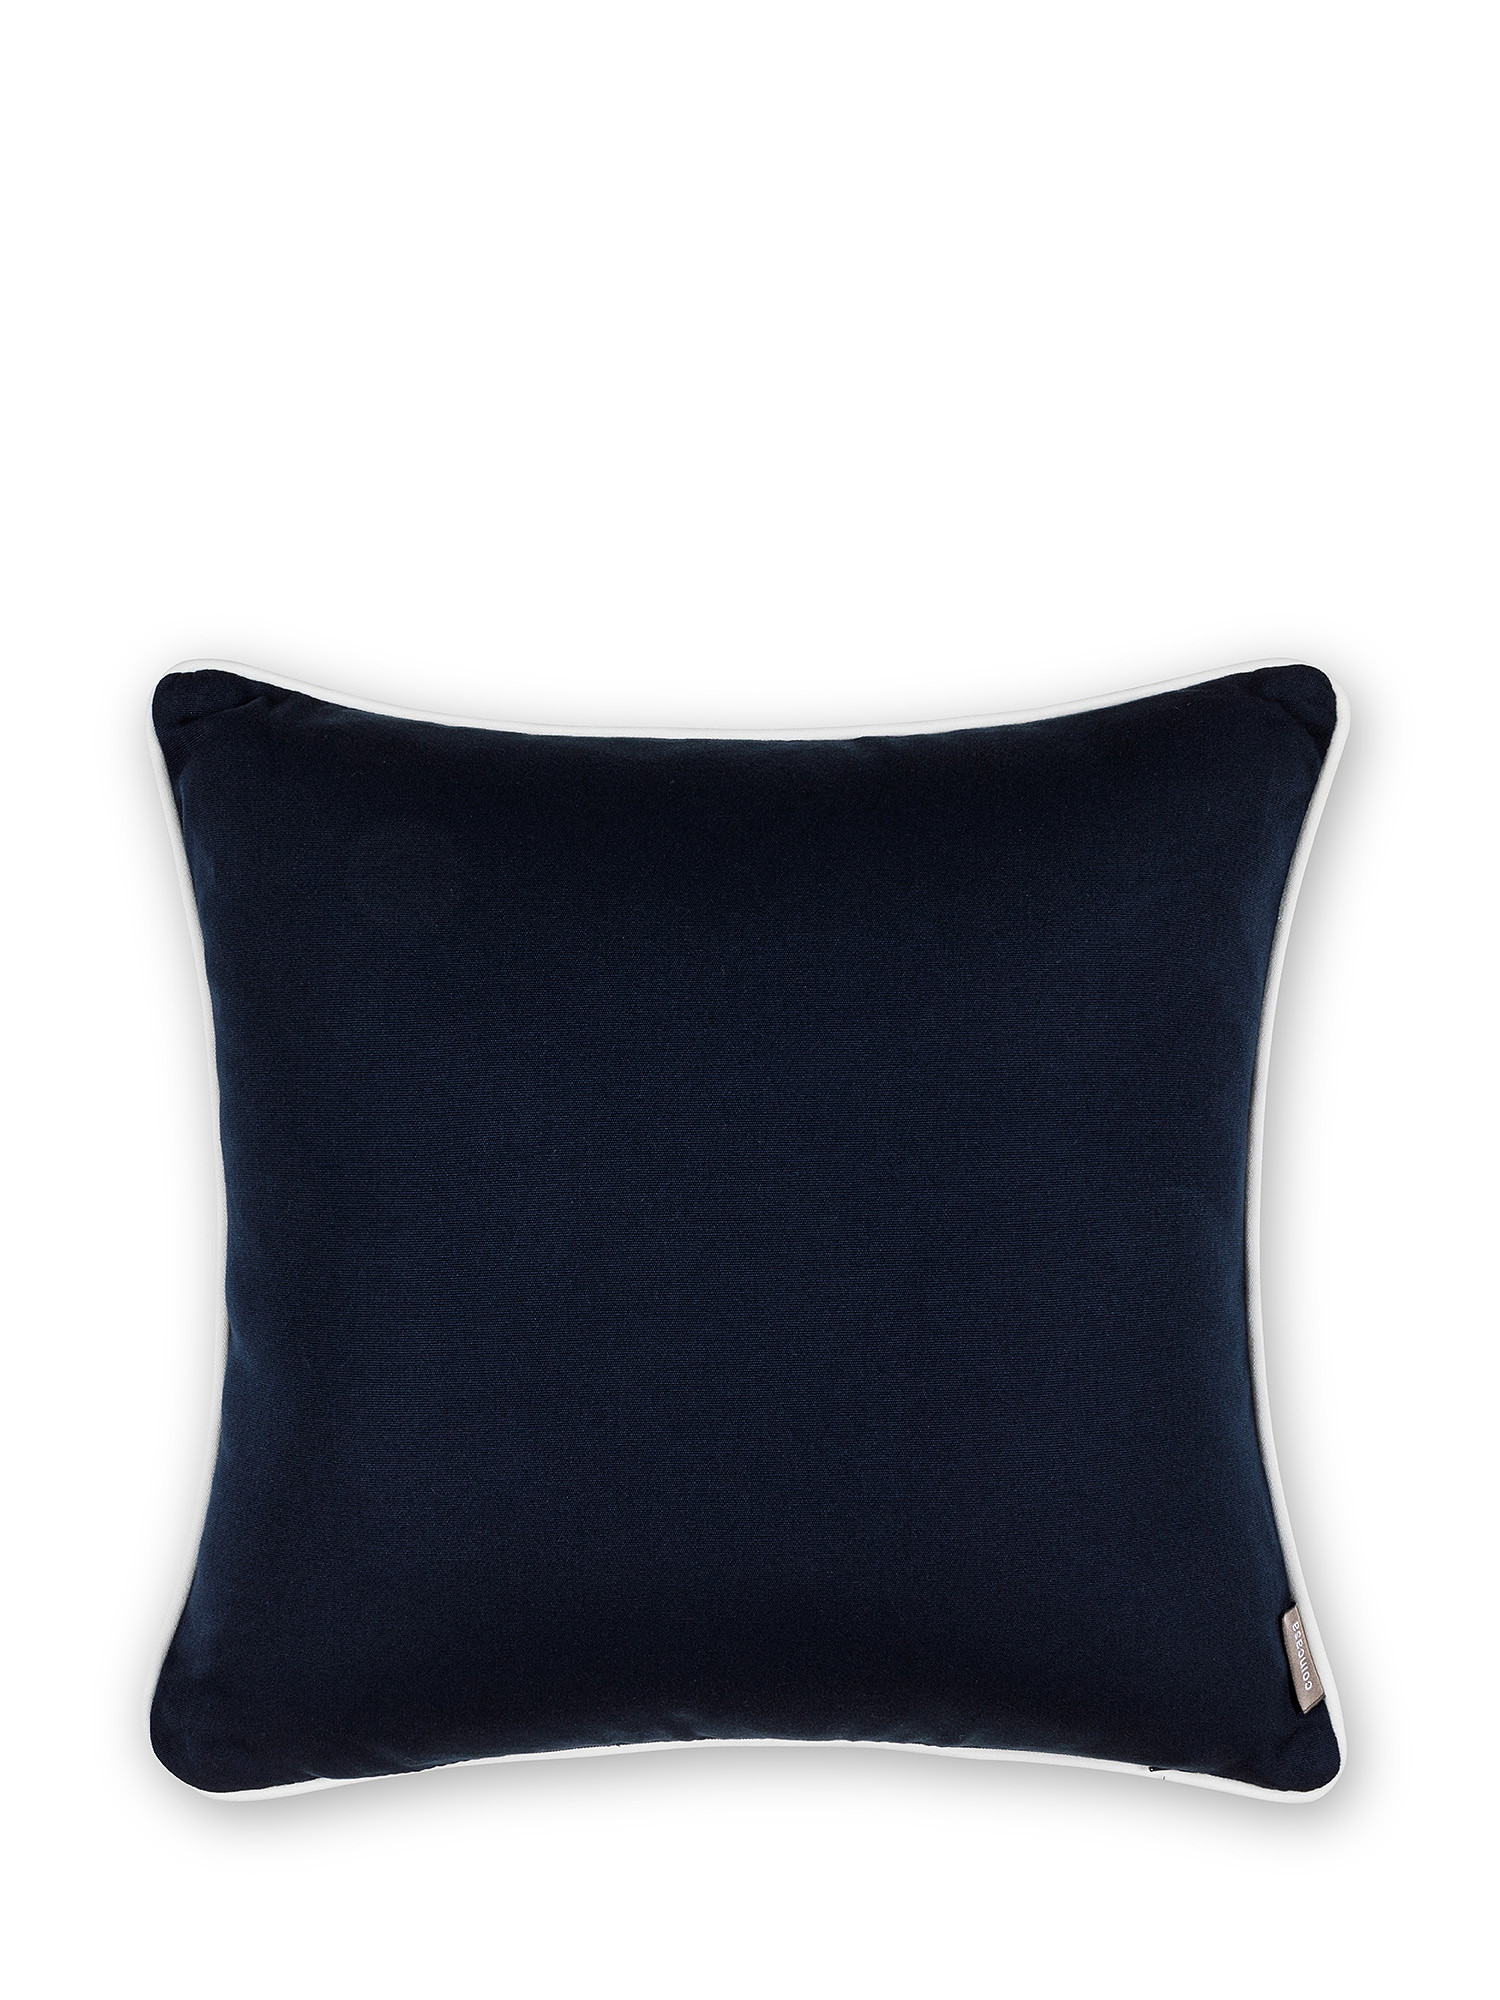 Cuscino da esterno in teflon 45x45cm, Blu, large image number 1